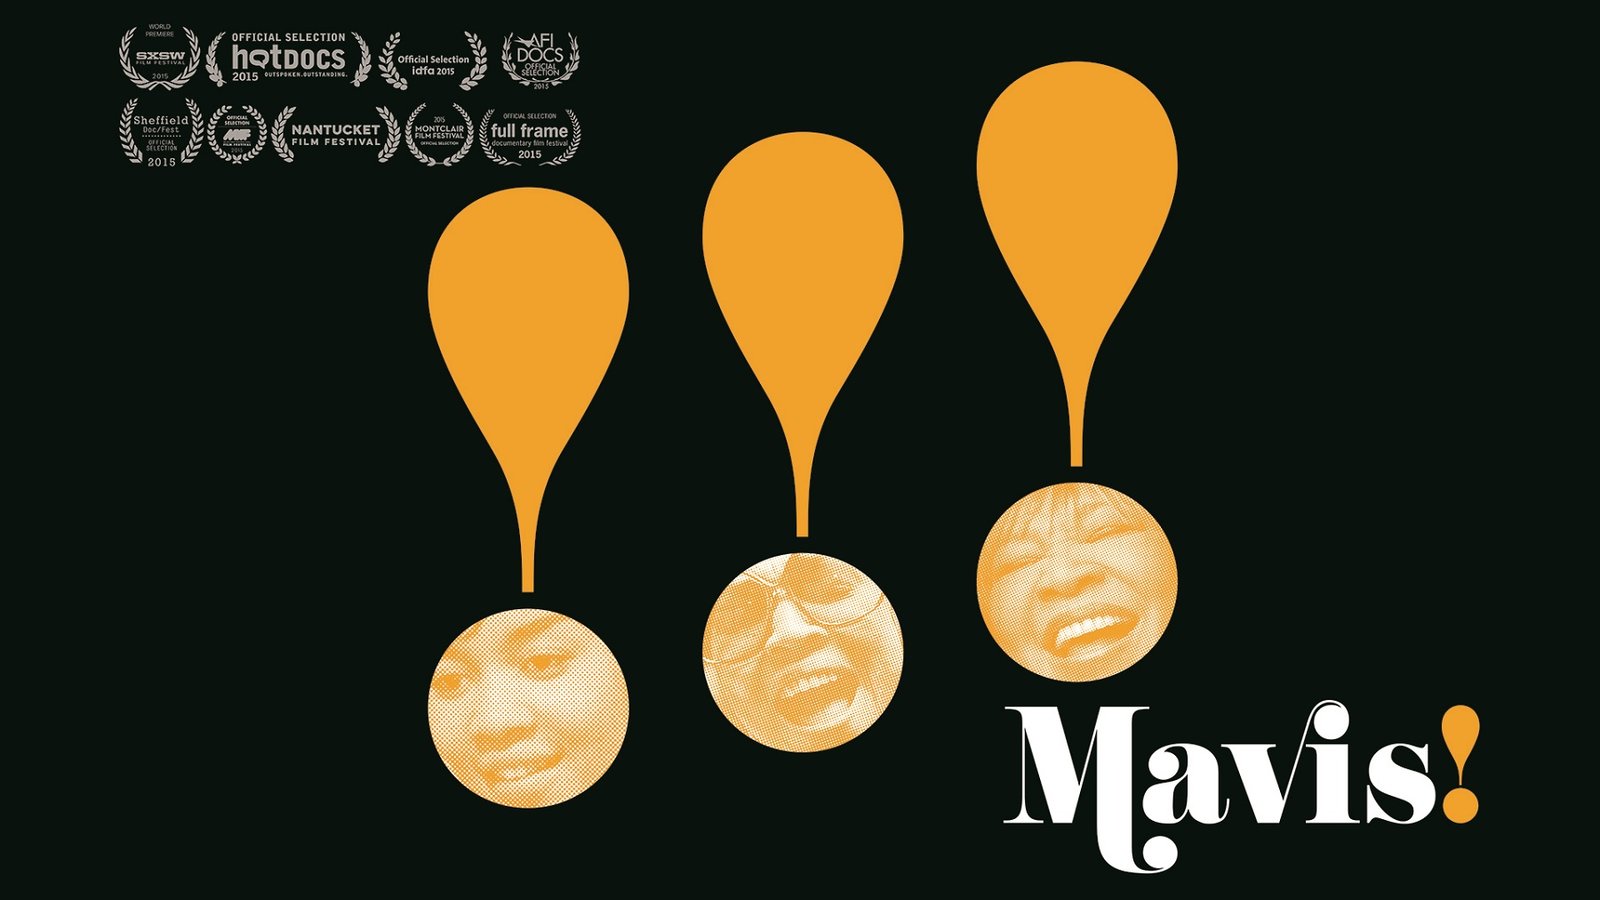 Mavis! - Gospel Music Legend and Civil Rights Activist Mavis Staples